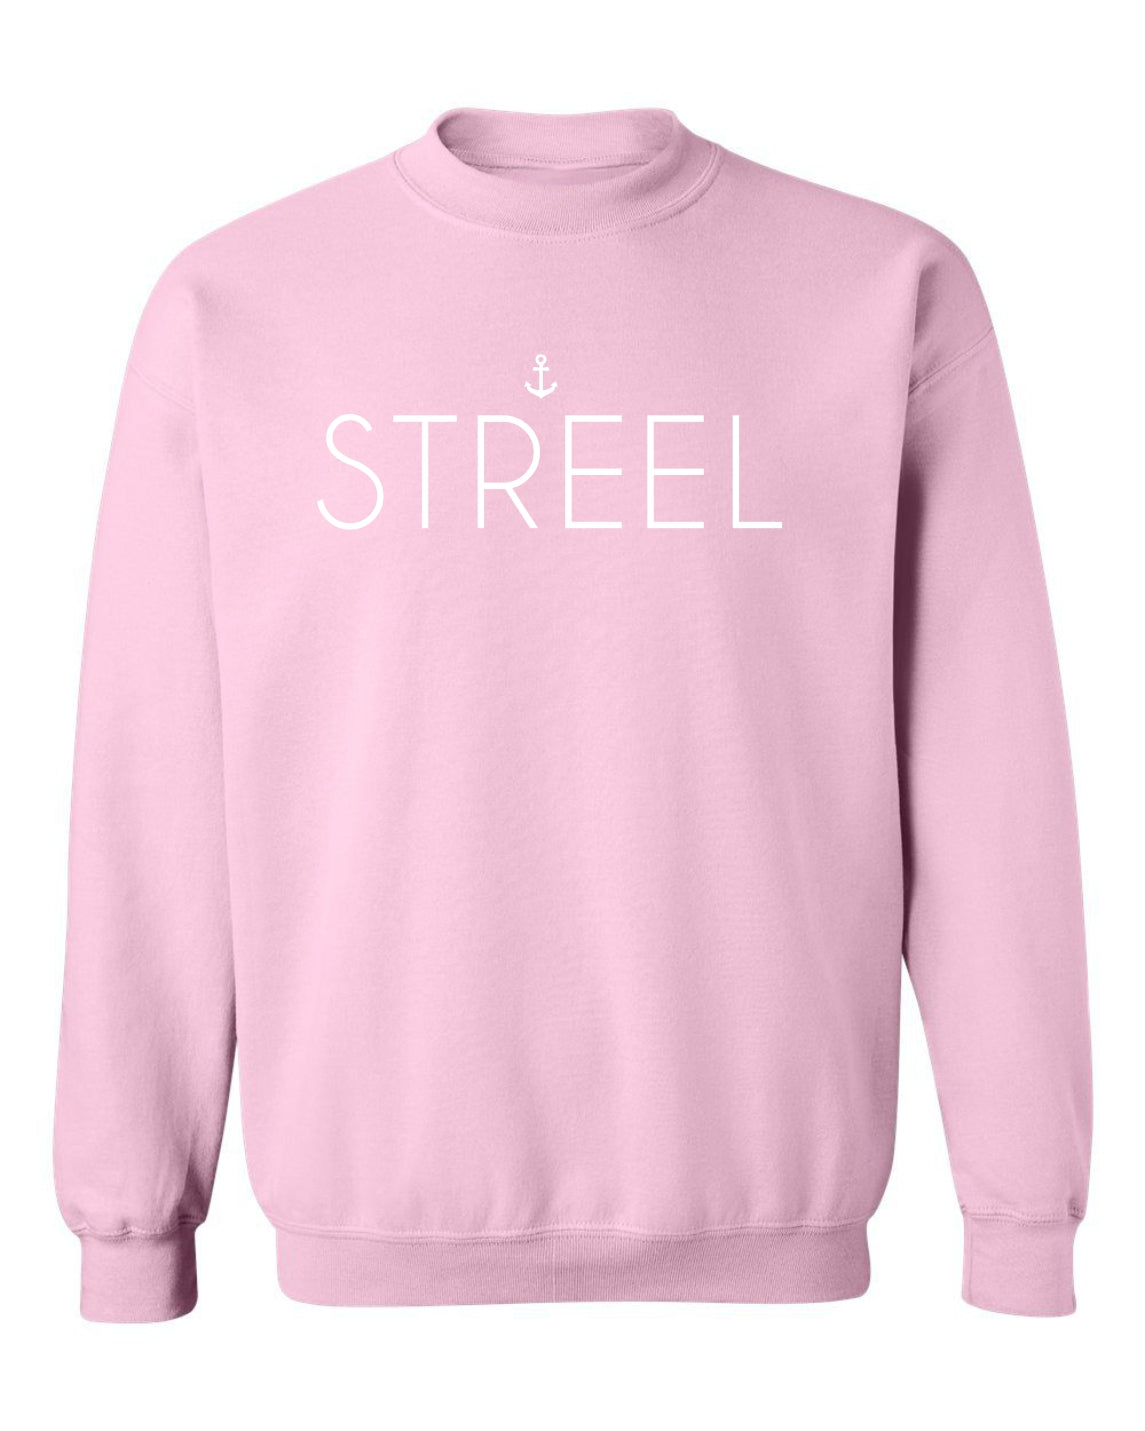 "Streel" Unisex Crewneck Sweatshirt